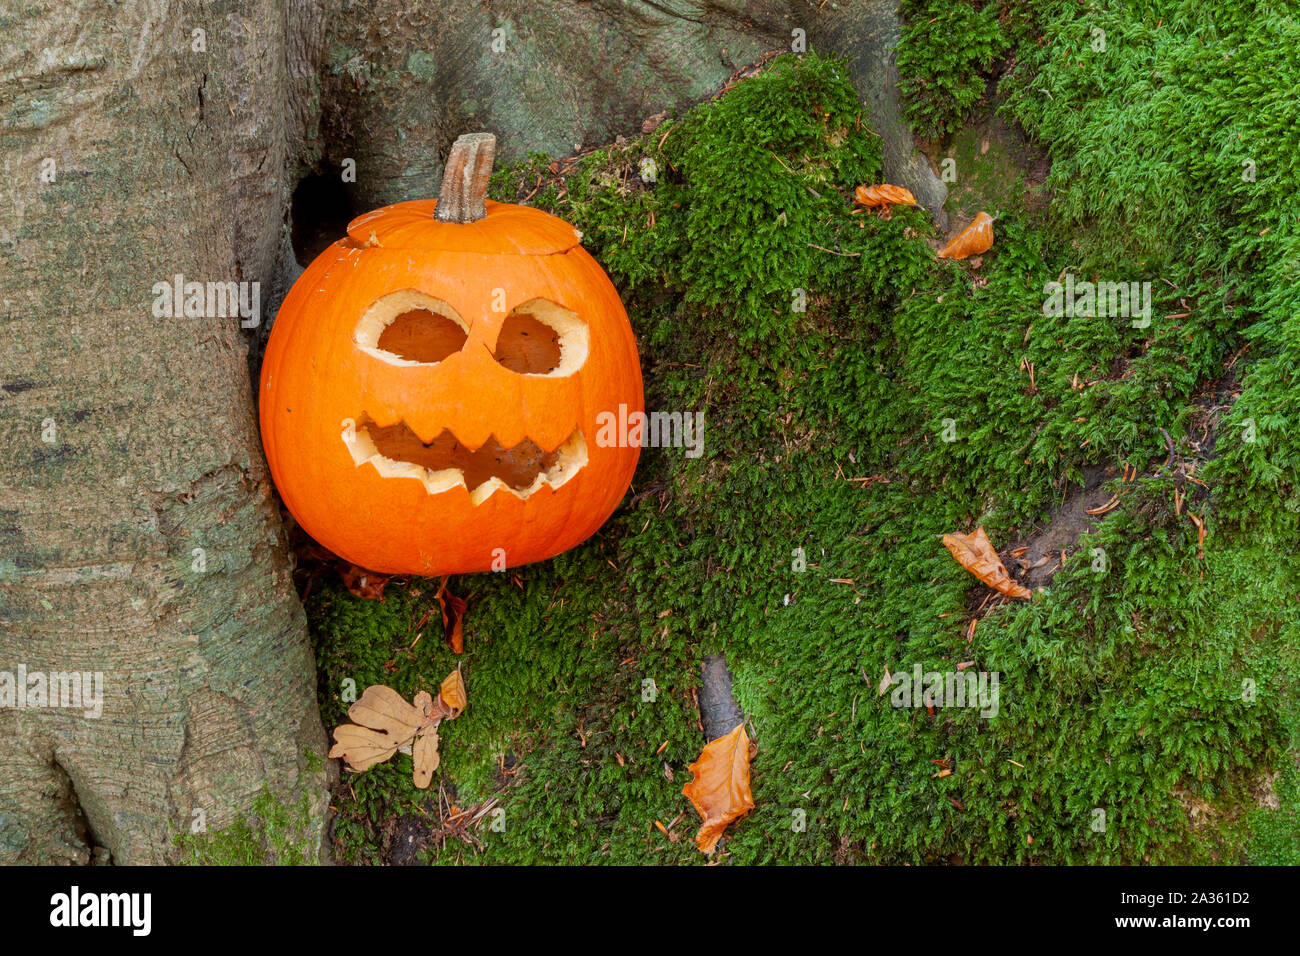 Big Pumpkin Scary Face Halloween Photo Stock Illustration 710535712